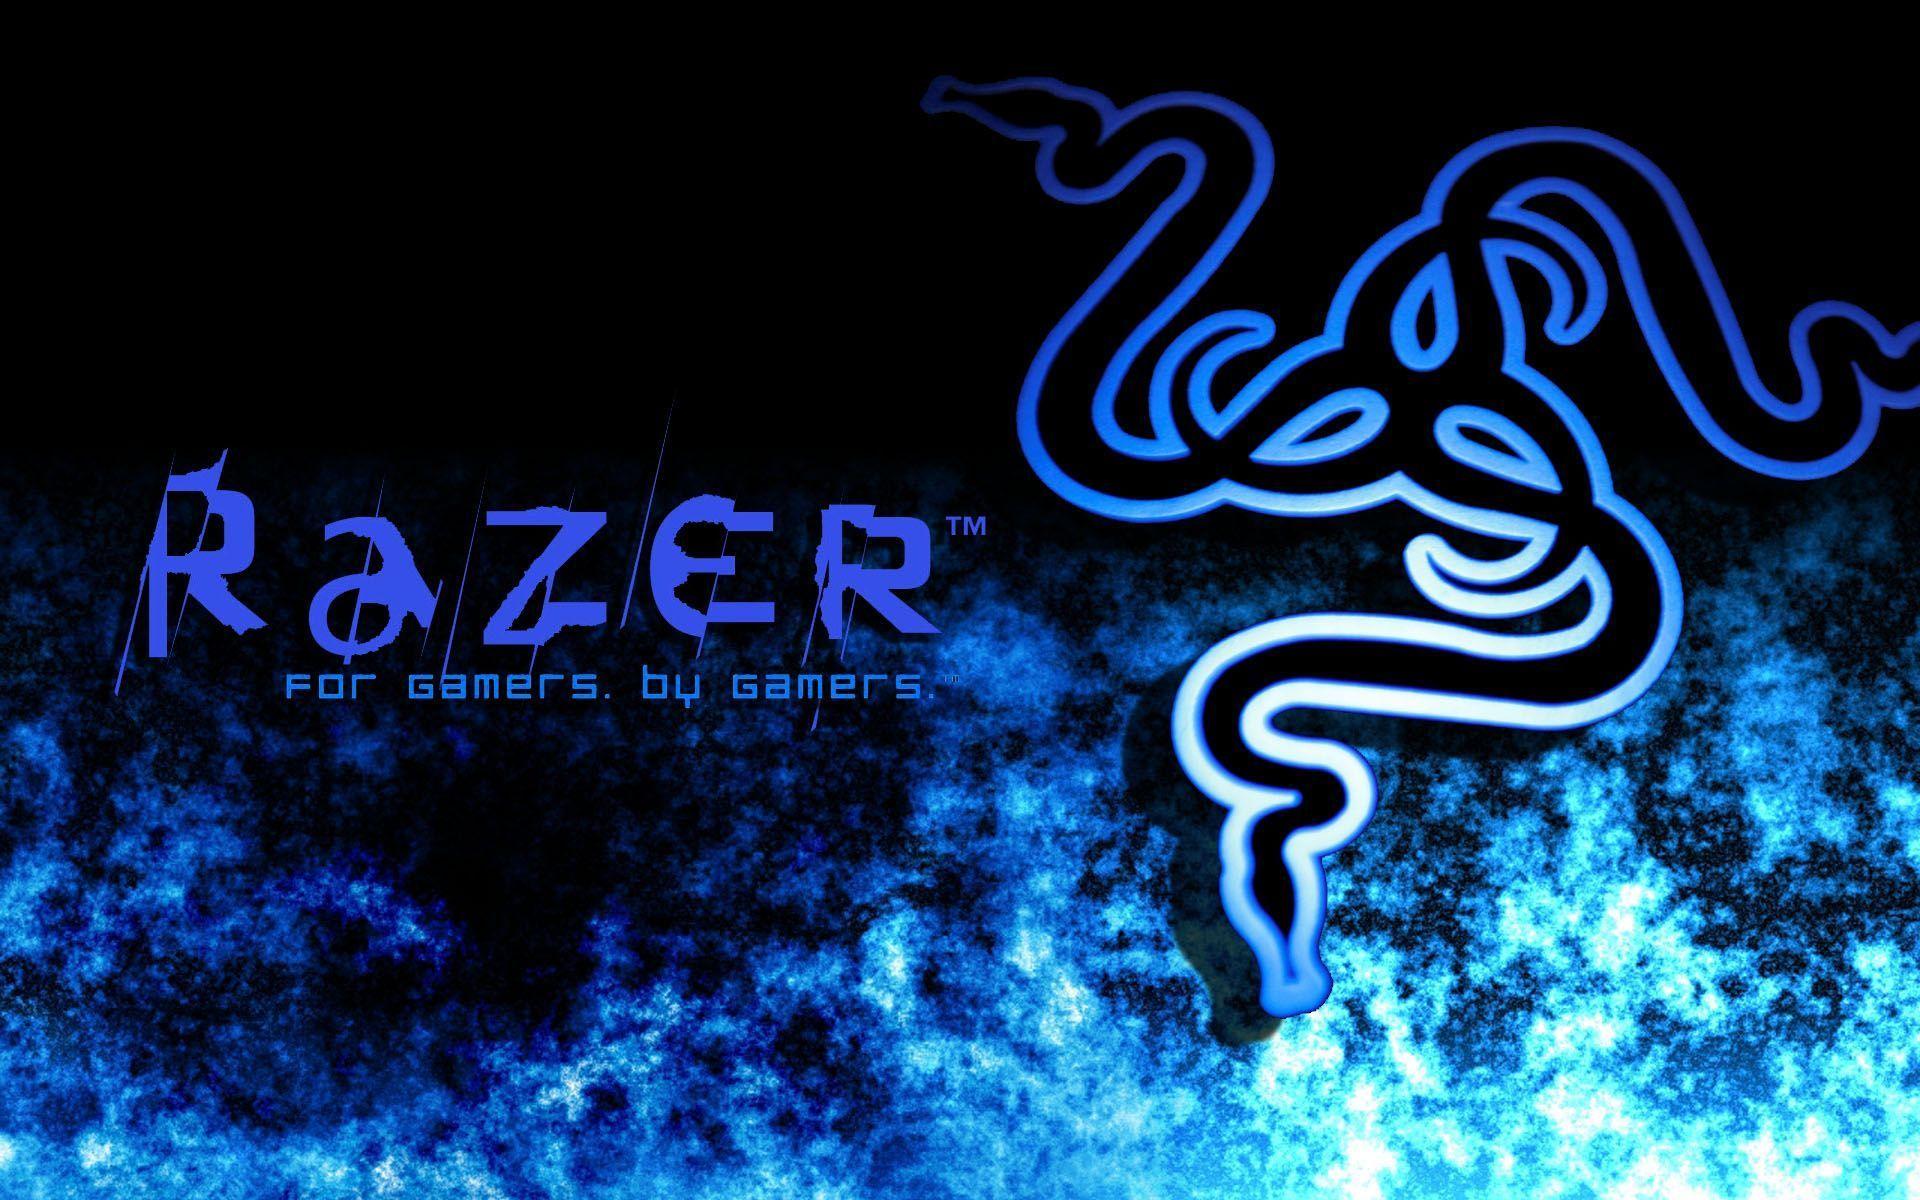 Razer Av3k Team Serious Gaming Wallpapers by RazerArts